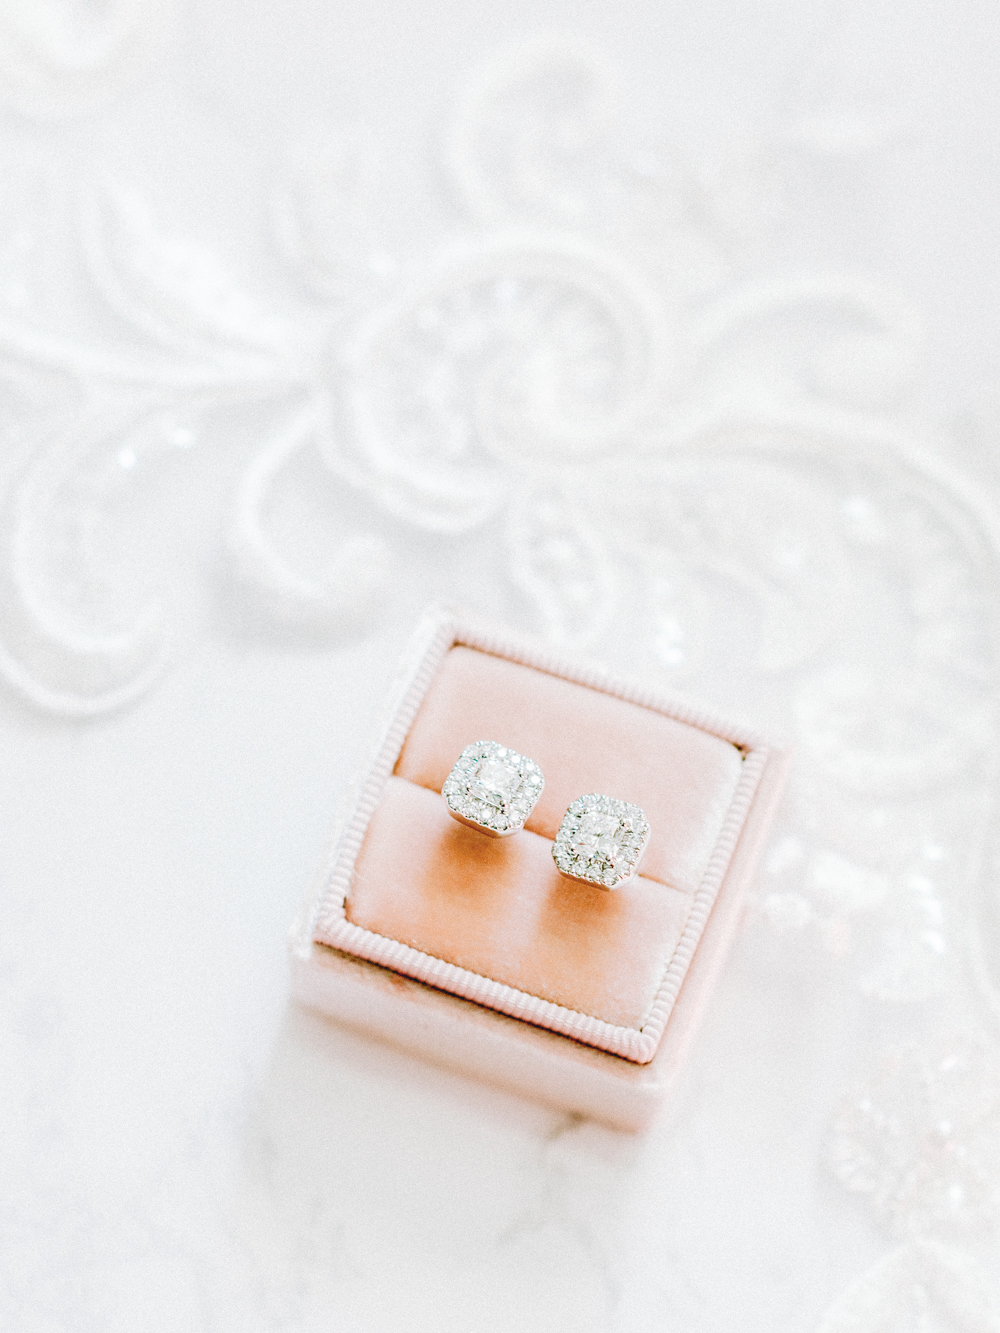 Fairytale diamond earrings with lace veil as the background